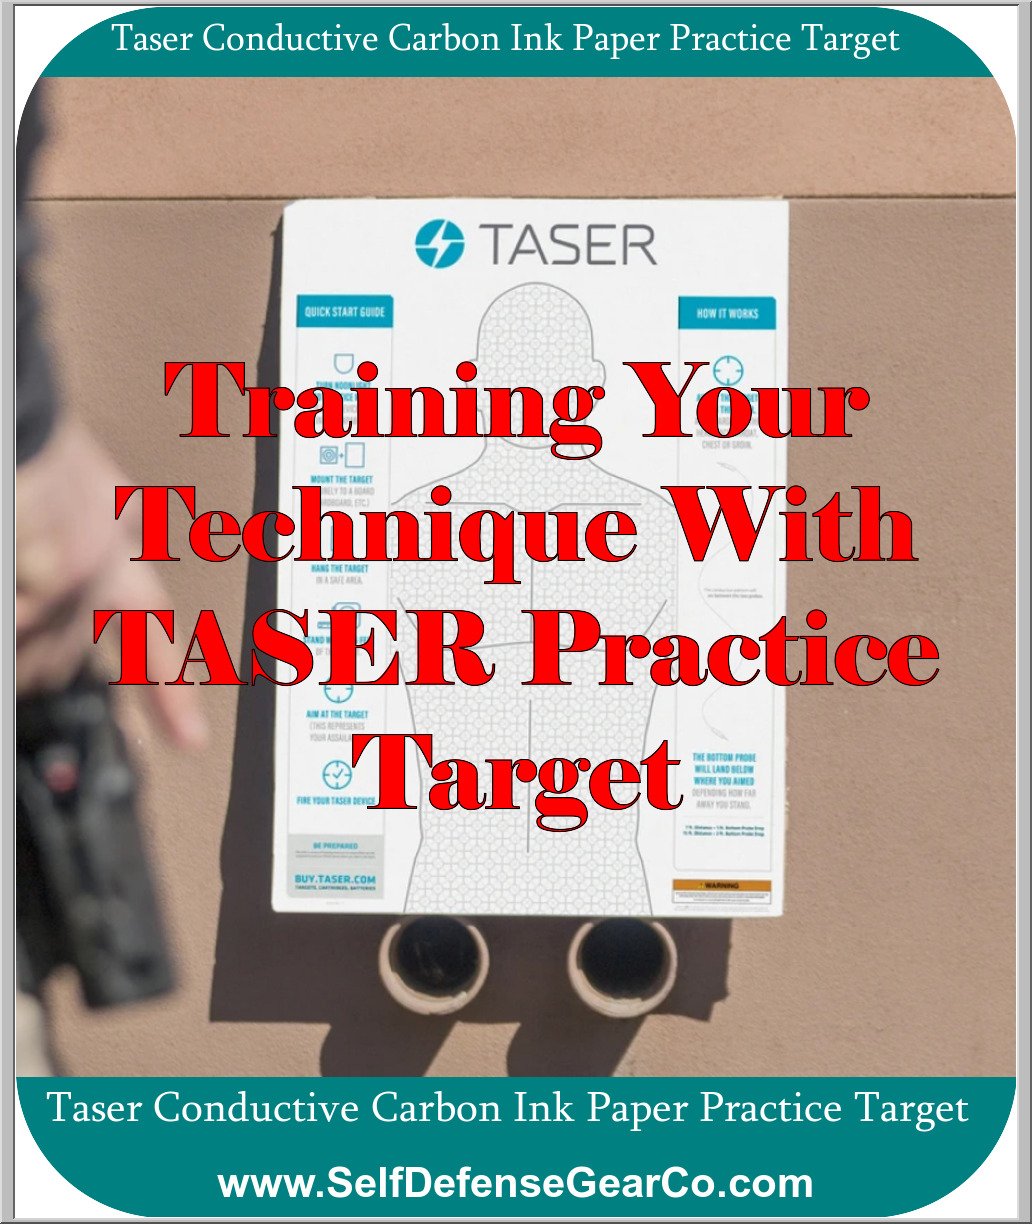 Taser Conductive Carbon Ink Paper Practice Target